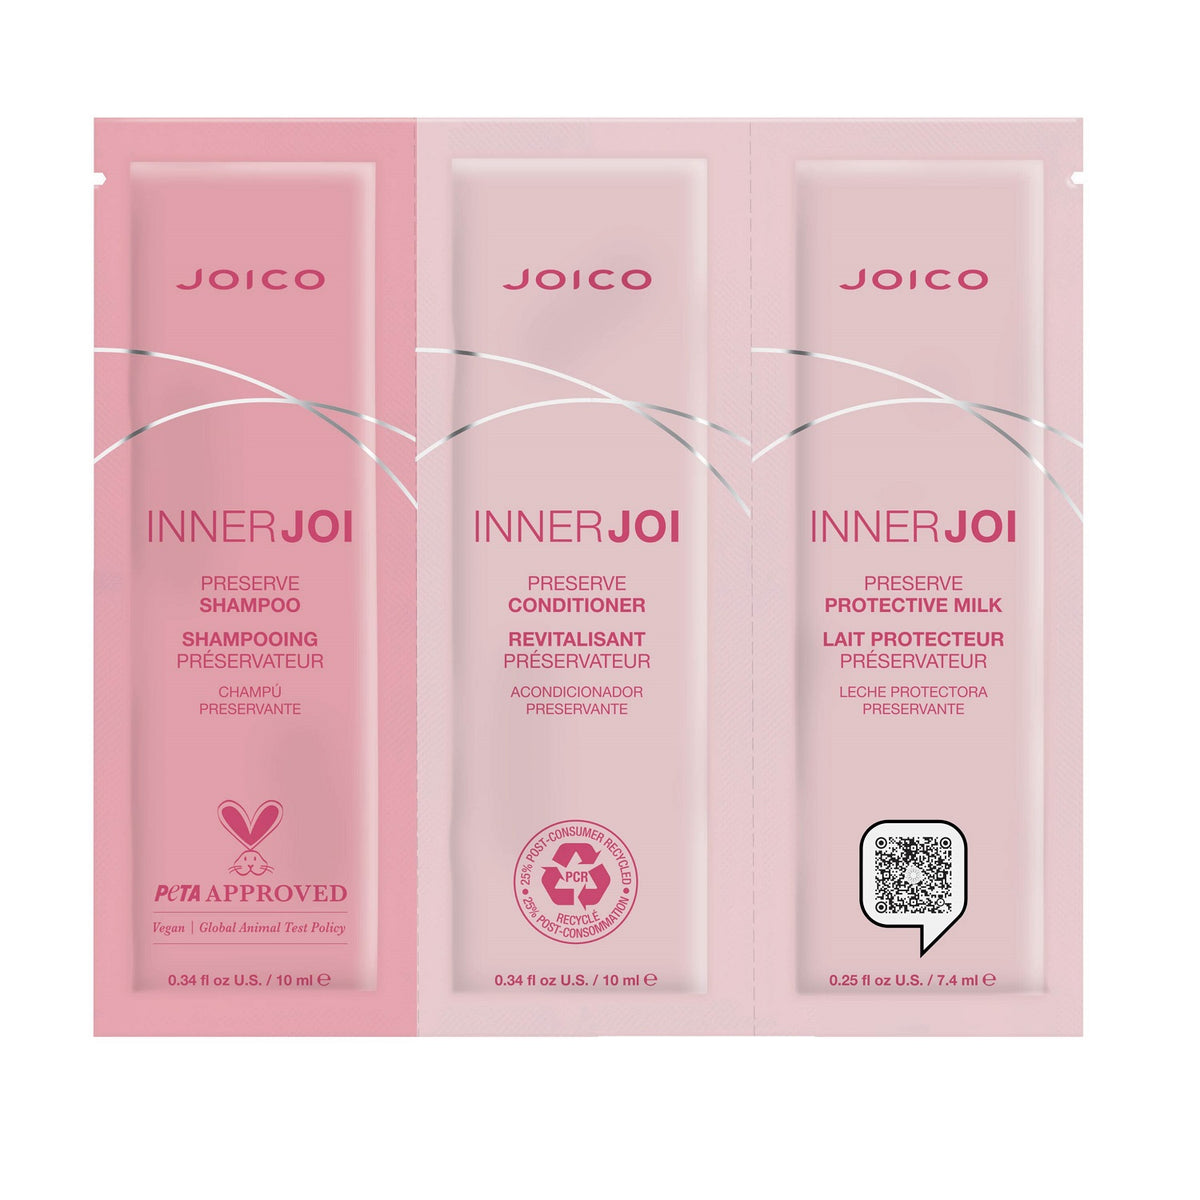 Joico InnerJoi Preserve Trio Haarpflegeset Shampoo 10 ml + Conditioner 10 ml + Protective Milk 7.4 ml